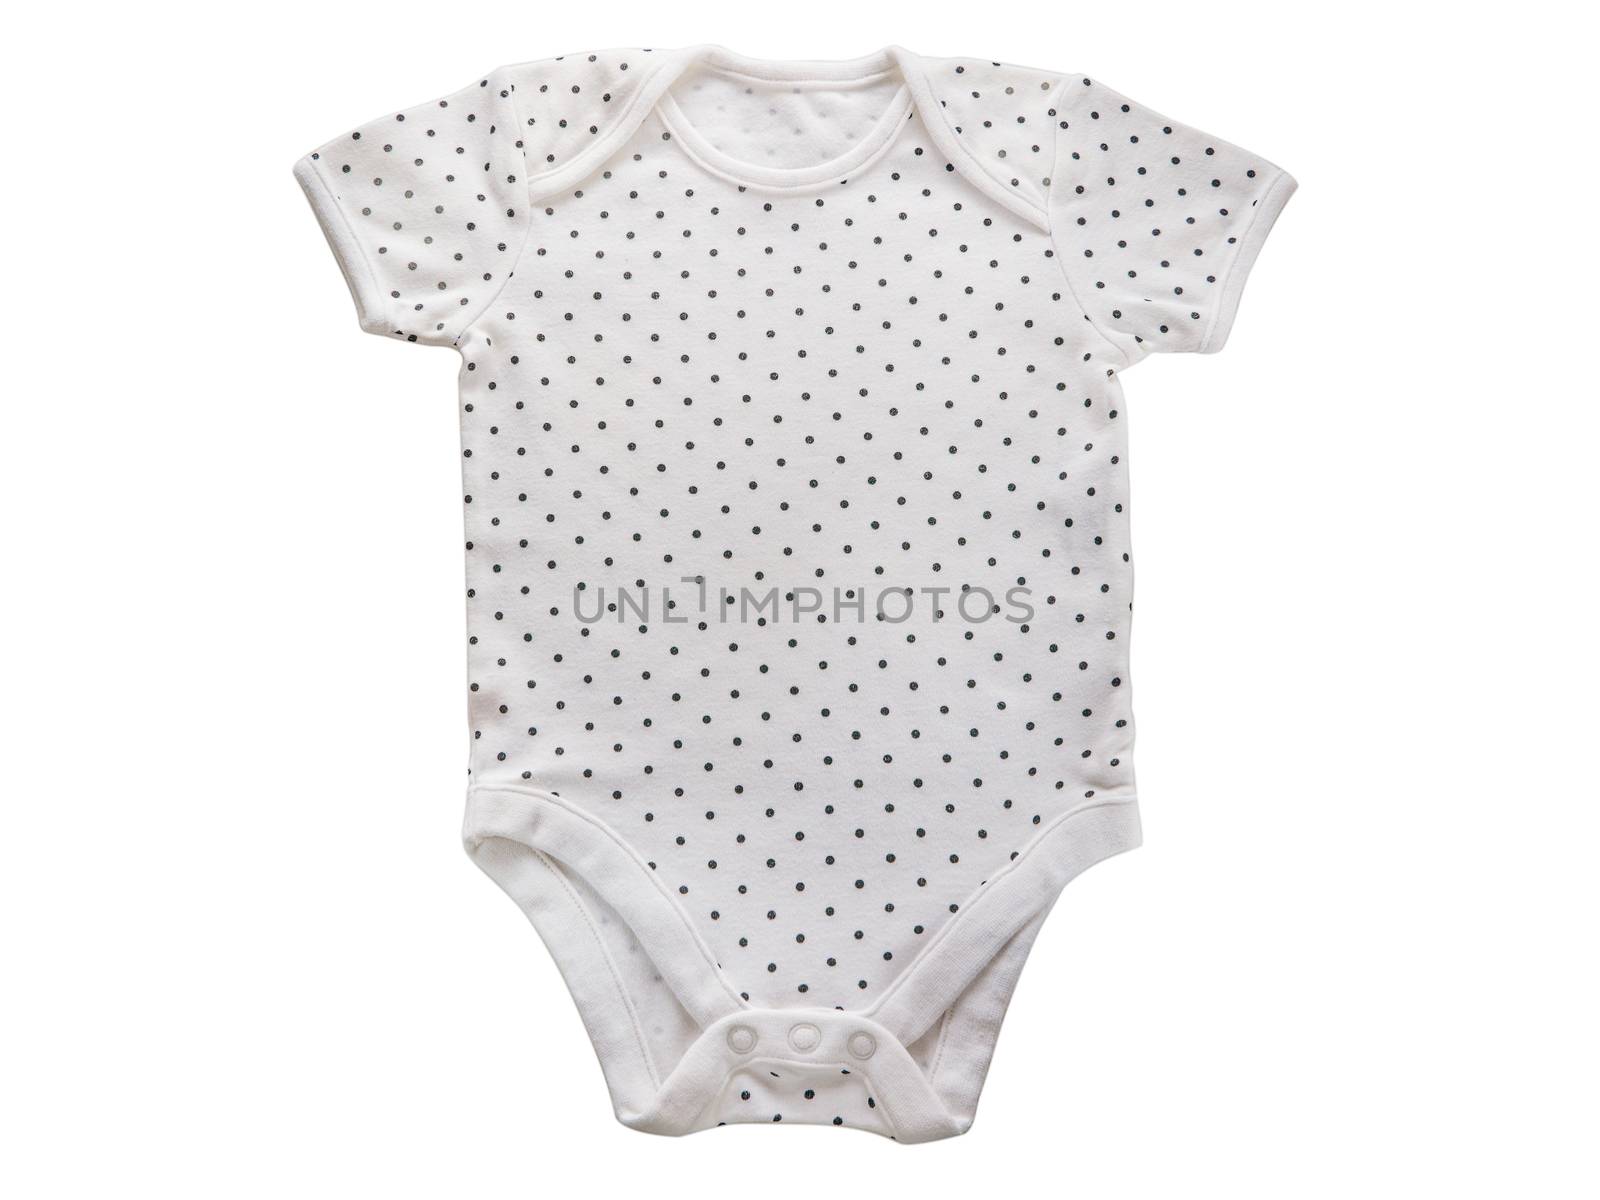 Baby polka dot onesie isolated on white background